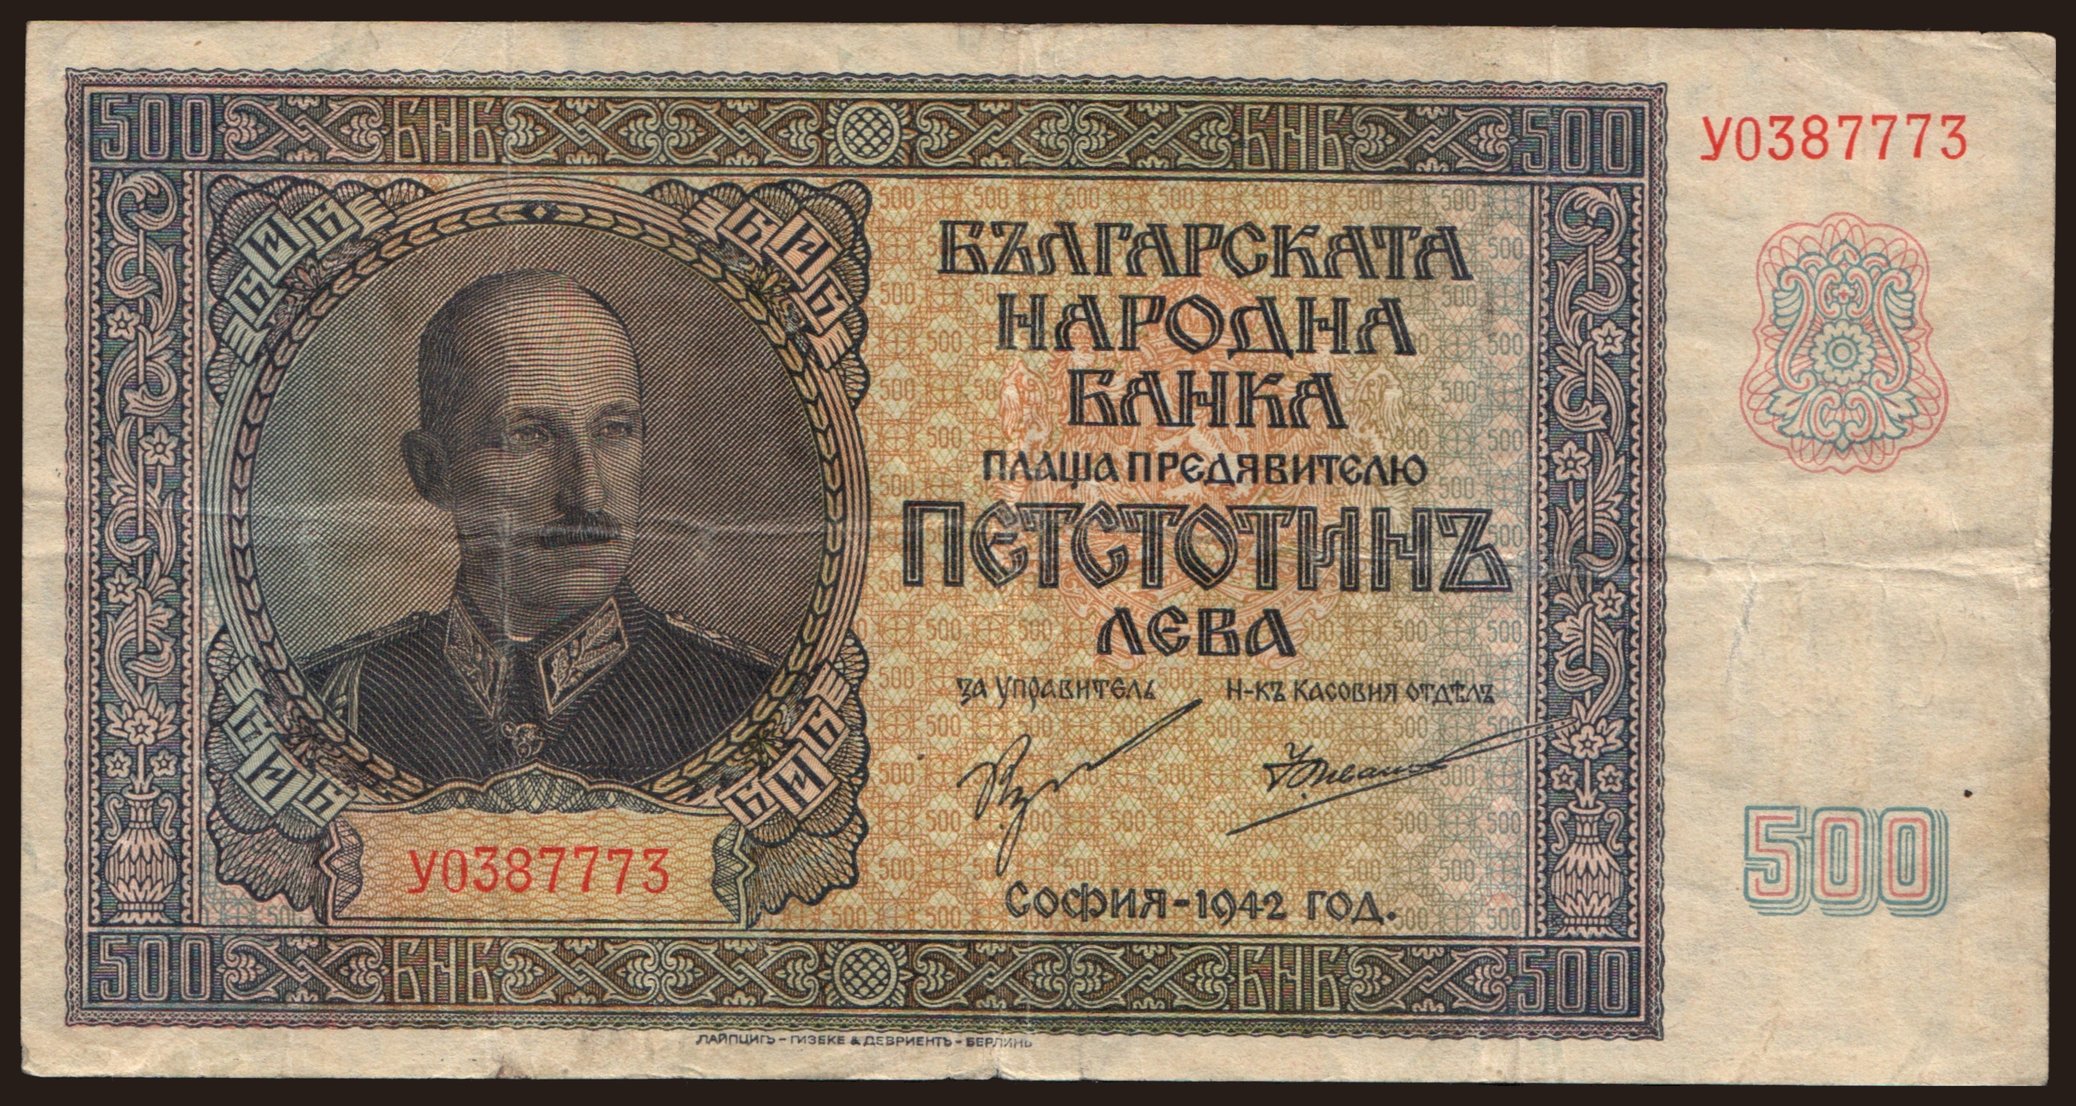 500 leva, 1942